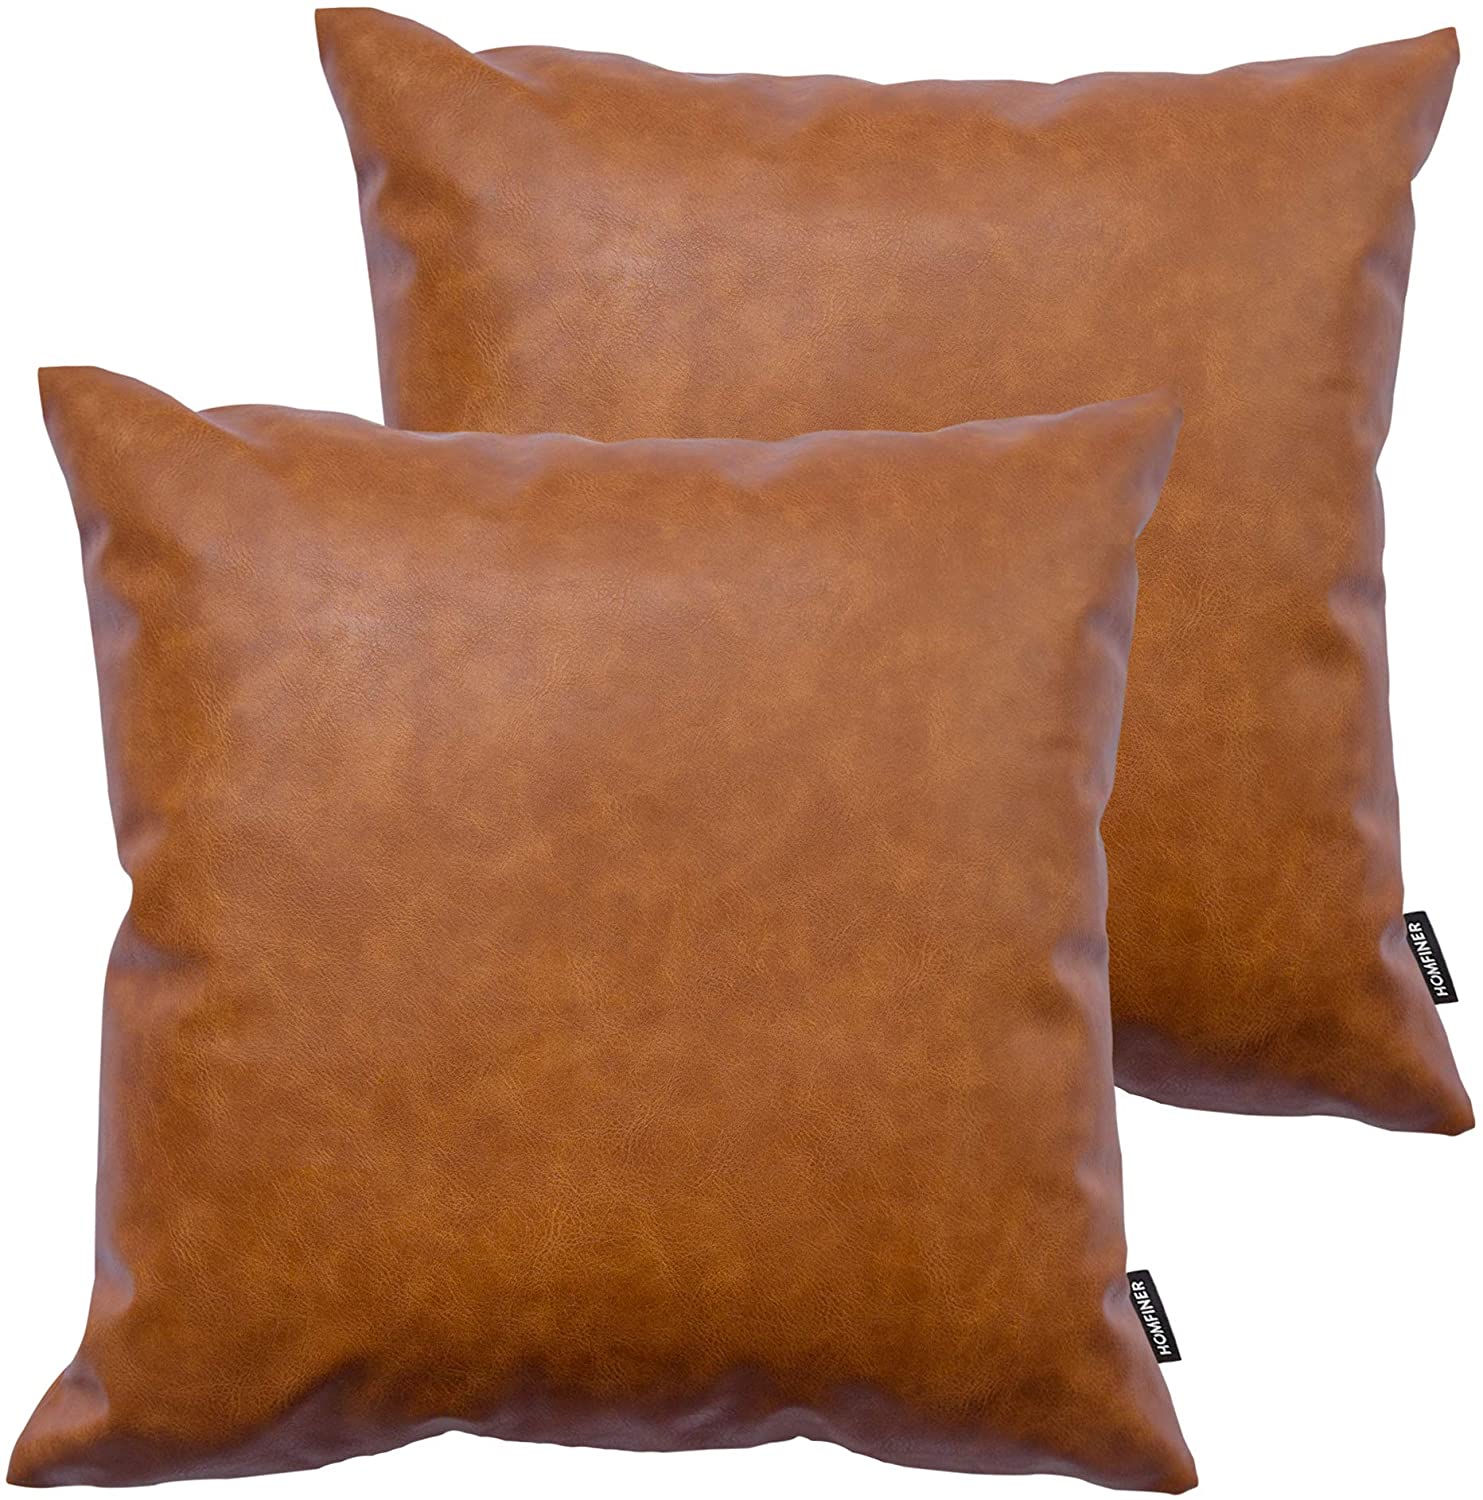 pix Pillows For Cognac Leather Sofa